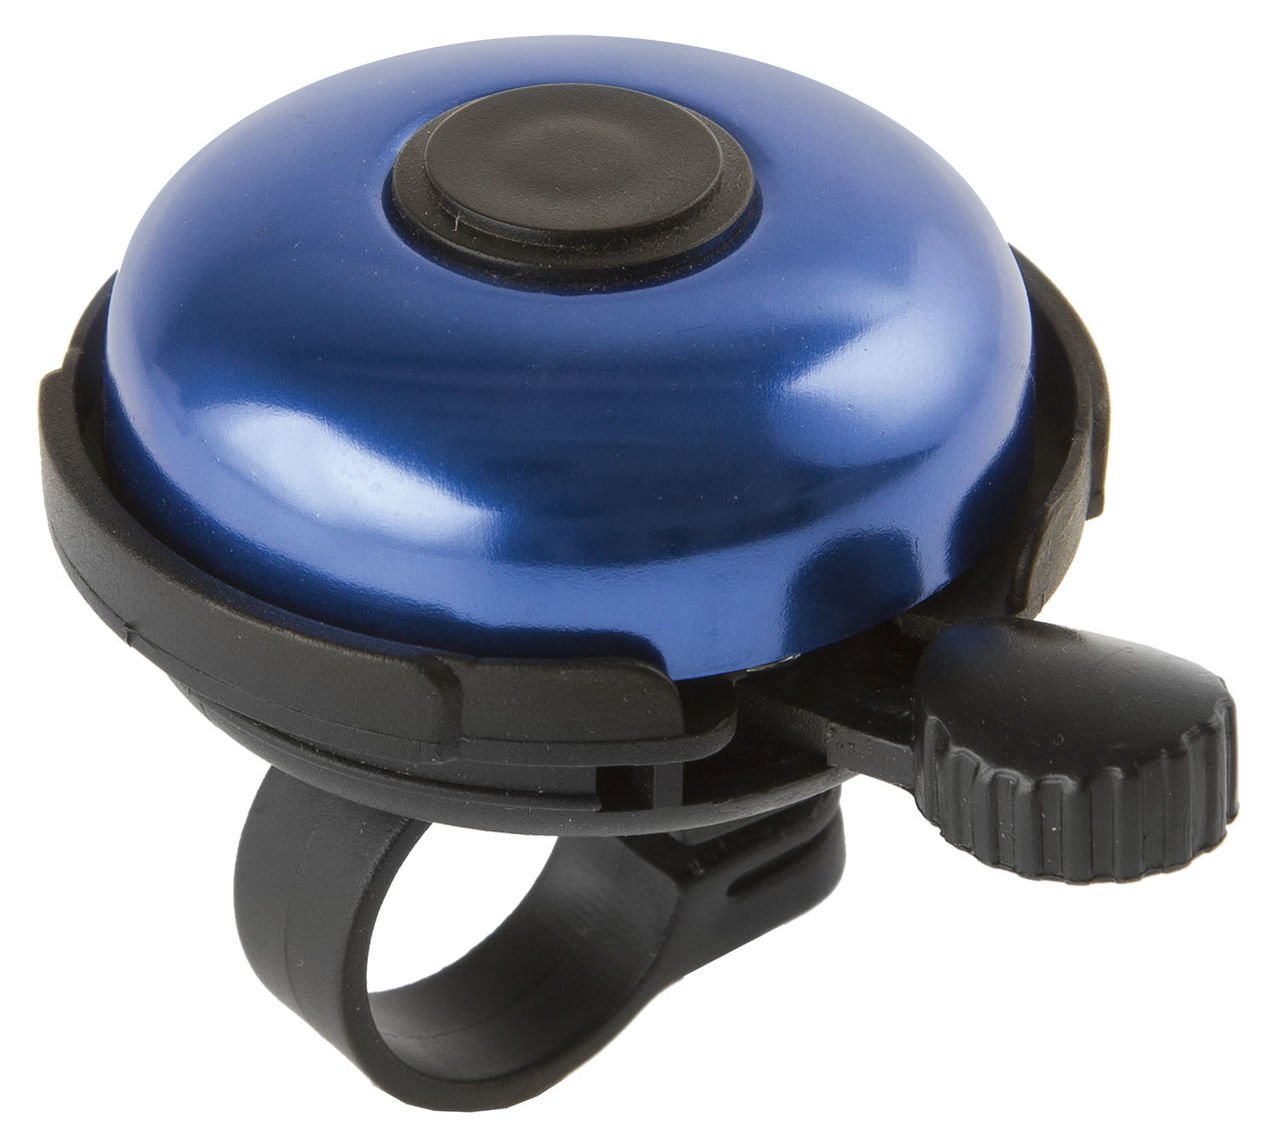 Звонок M-Wave алюминий /пластик D=53мм (240) цв. черно-синий, 5-420154 звонок велосипедный multibrand на руль со встроенным компасом латунь пластик диаметр 47 мм зол tse compass